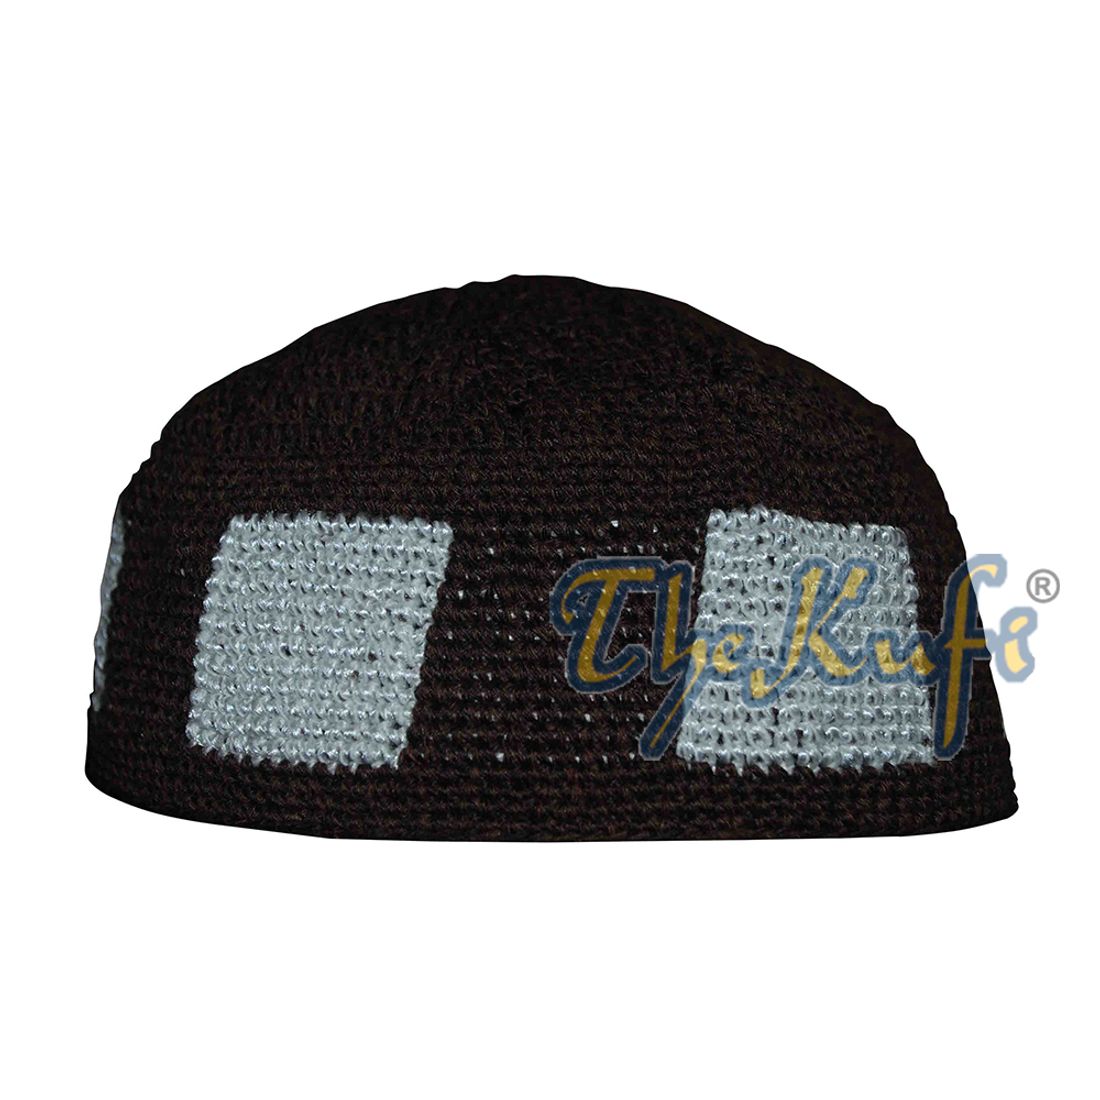 Dark Brown Hand-crocheted Durable Cotton Kufi Hat Cap with White Design